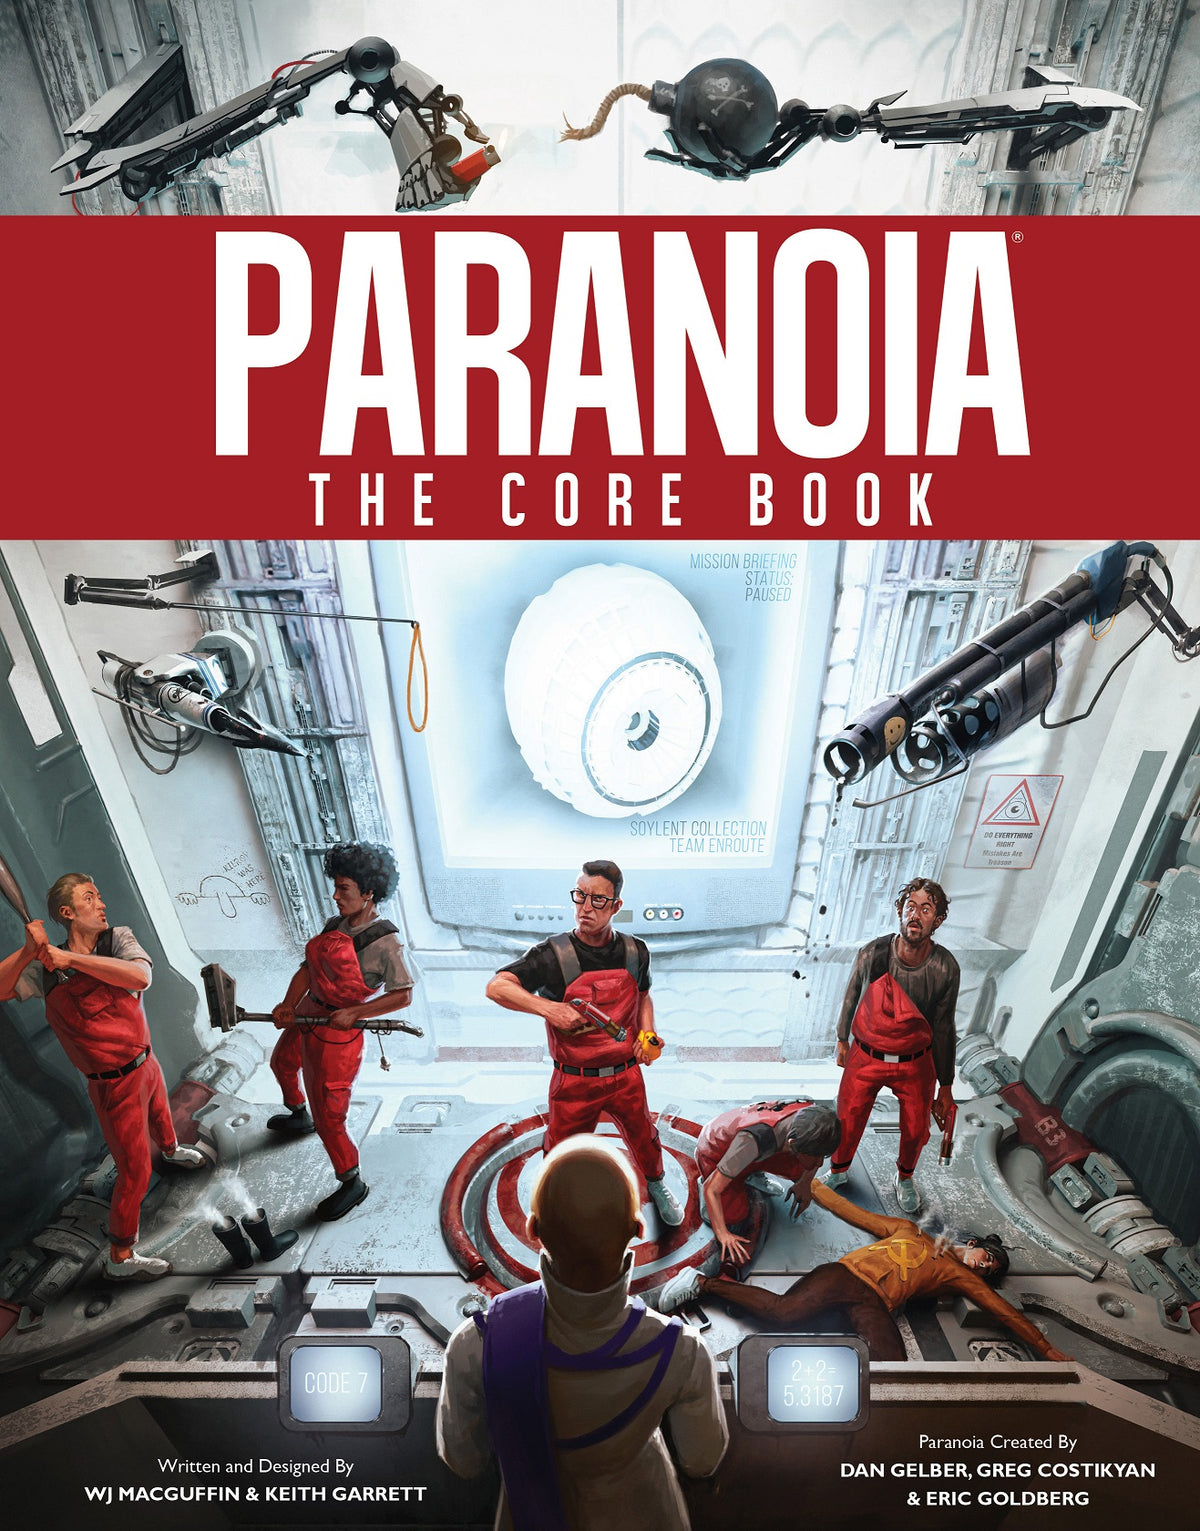 Paranoia Core Book